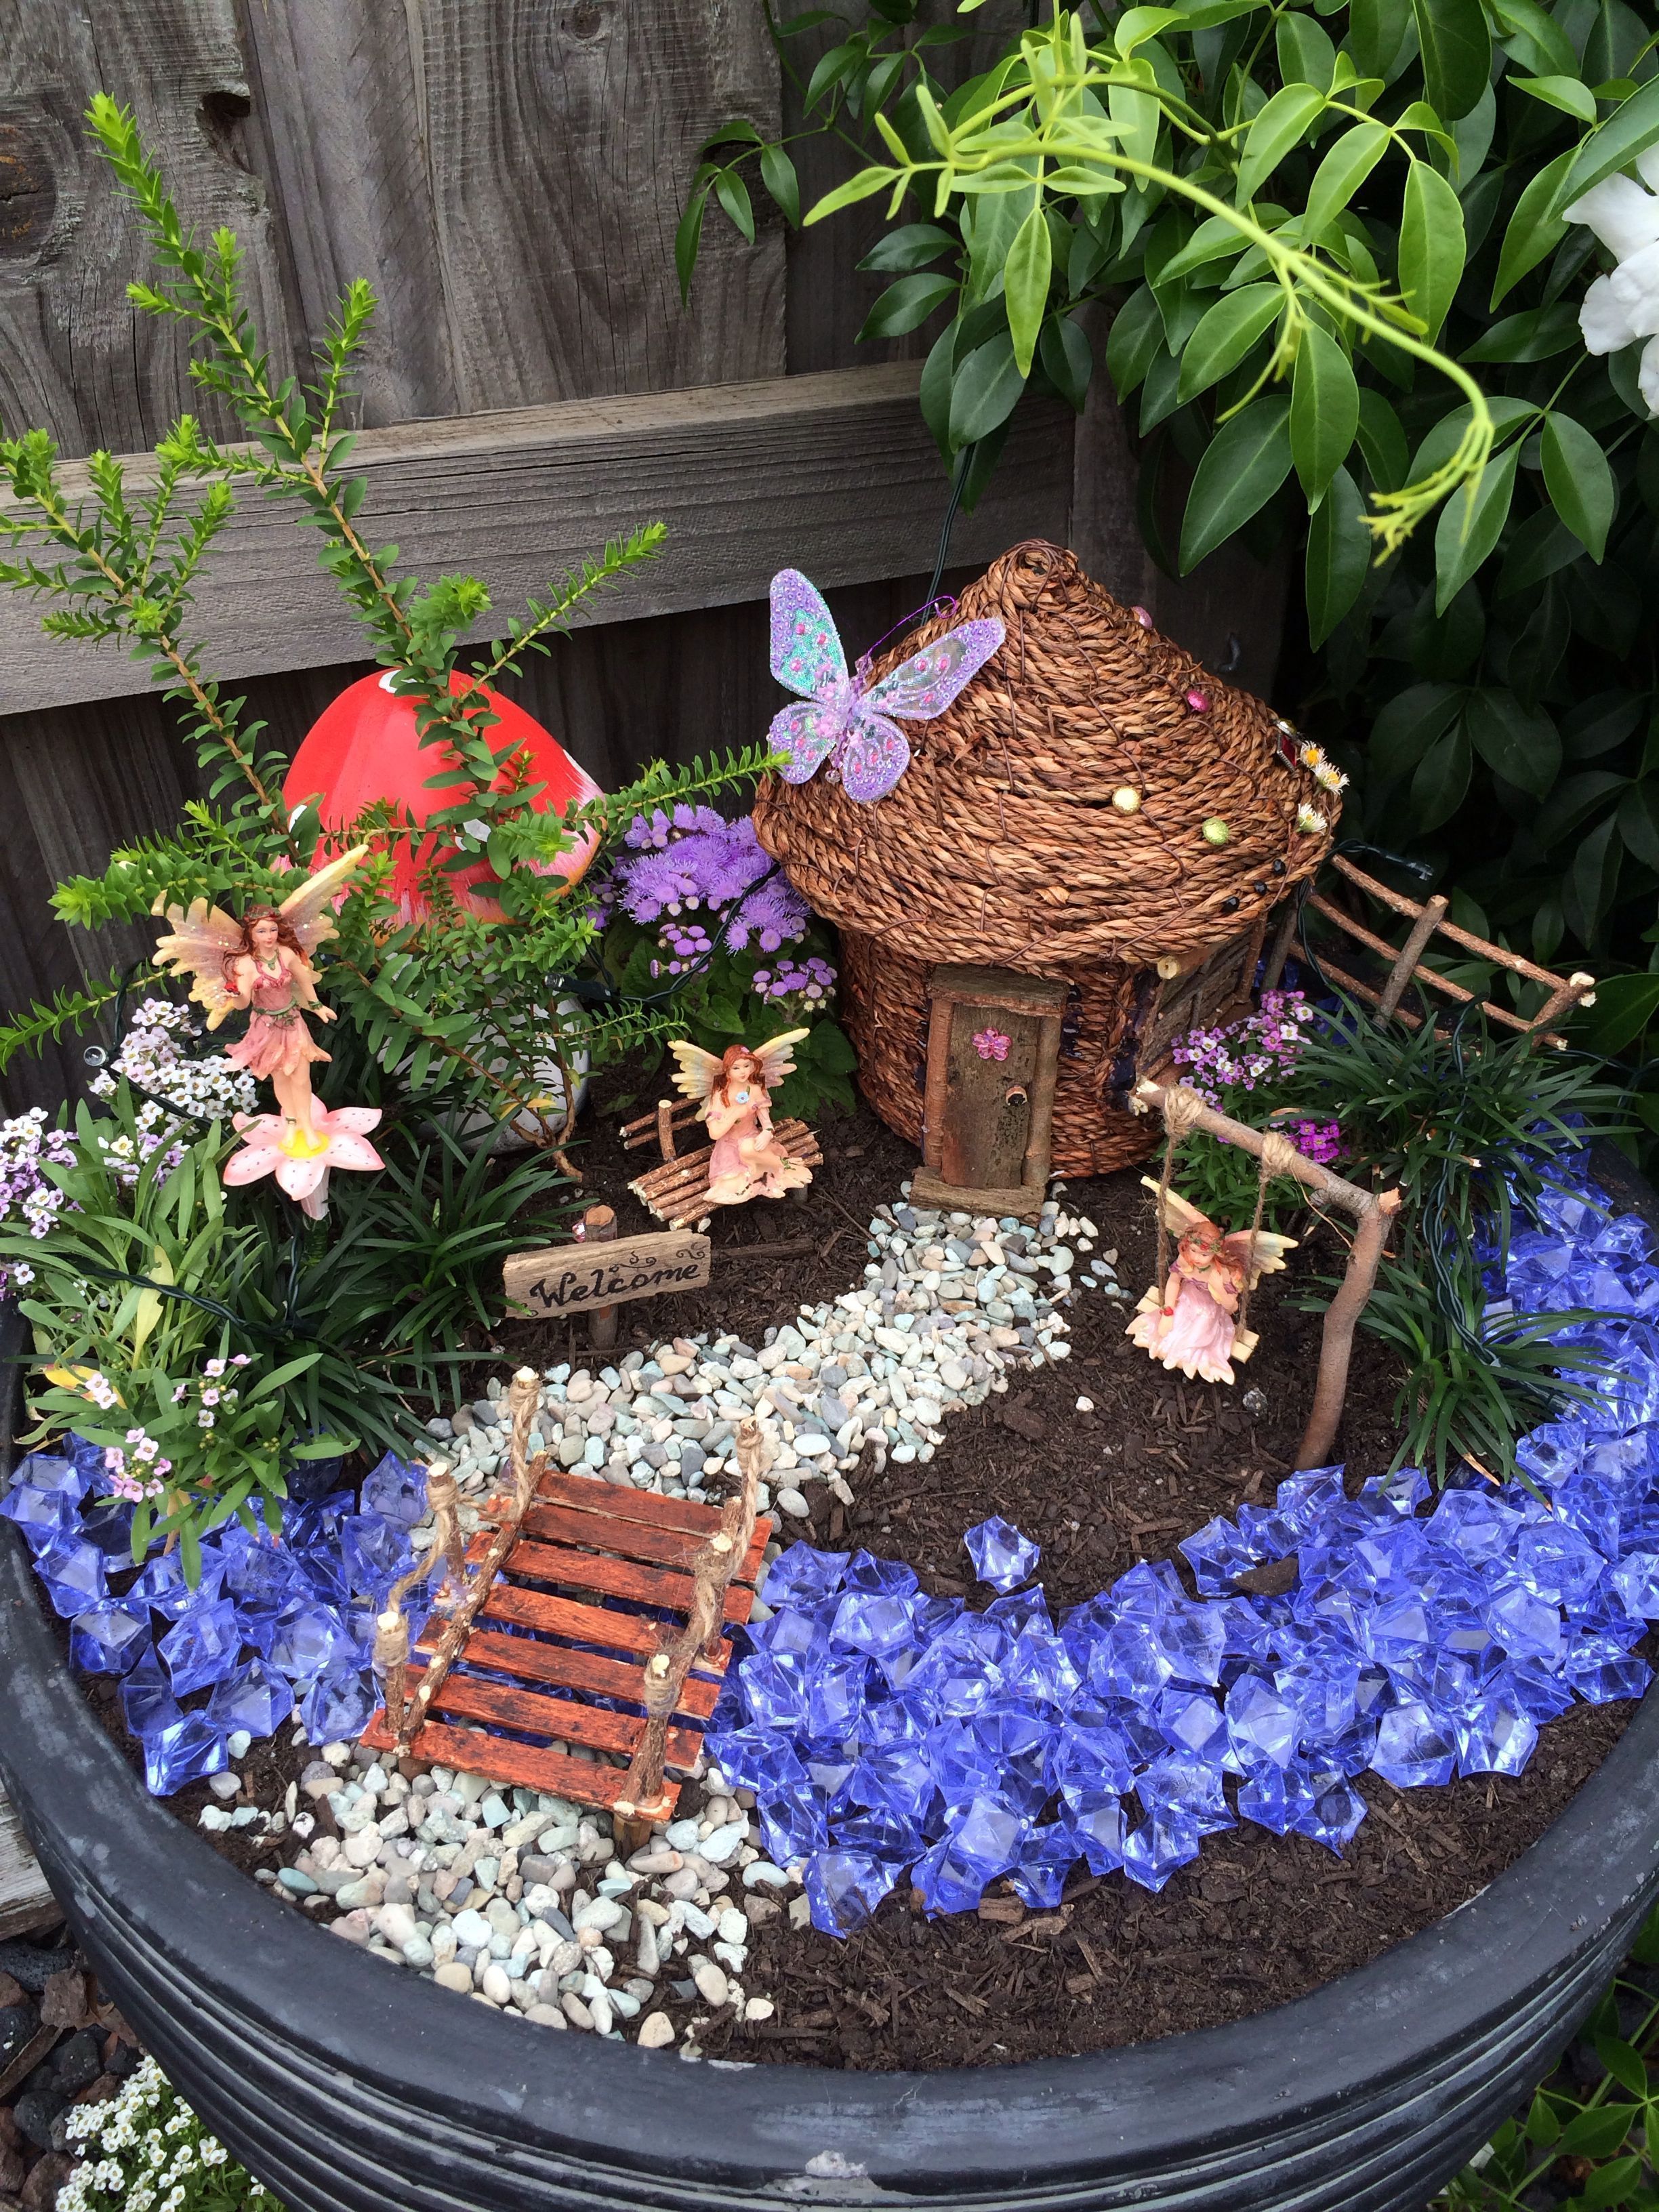 52 Lovely and Magical Miniature Fairy Garden Ideas -   Awesome miniature fairy garden ideas